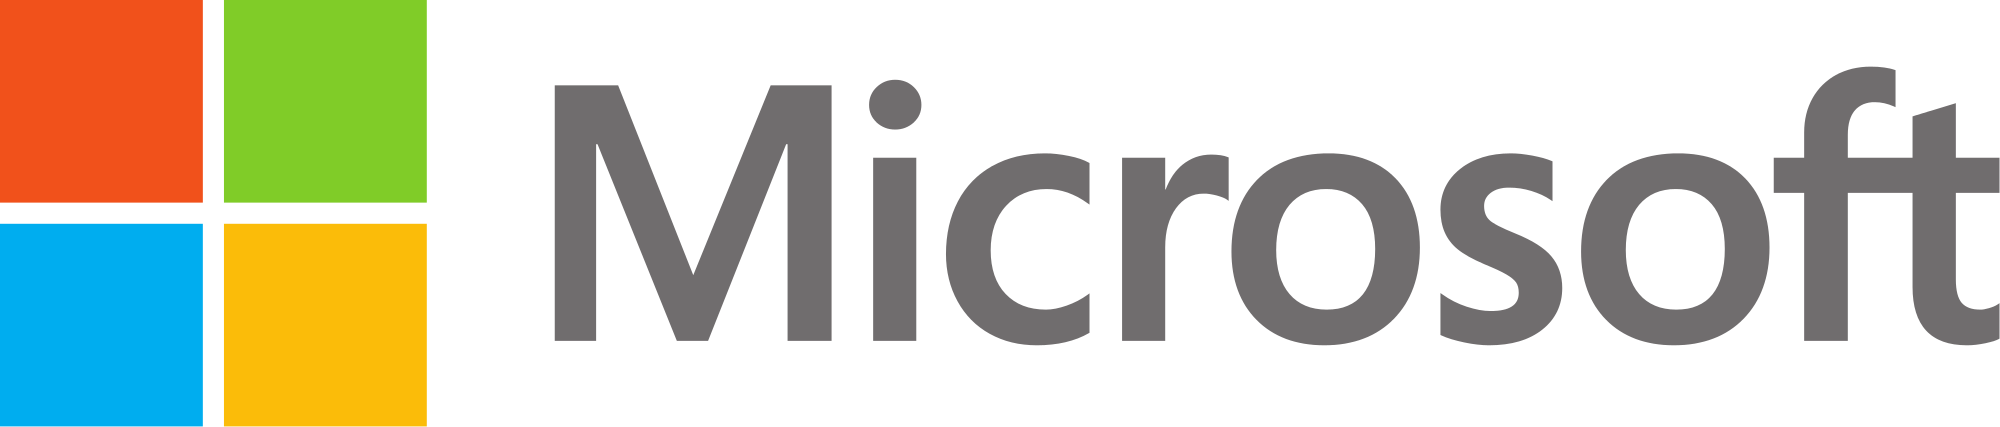 Microsoft Logo PNG Image